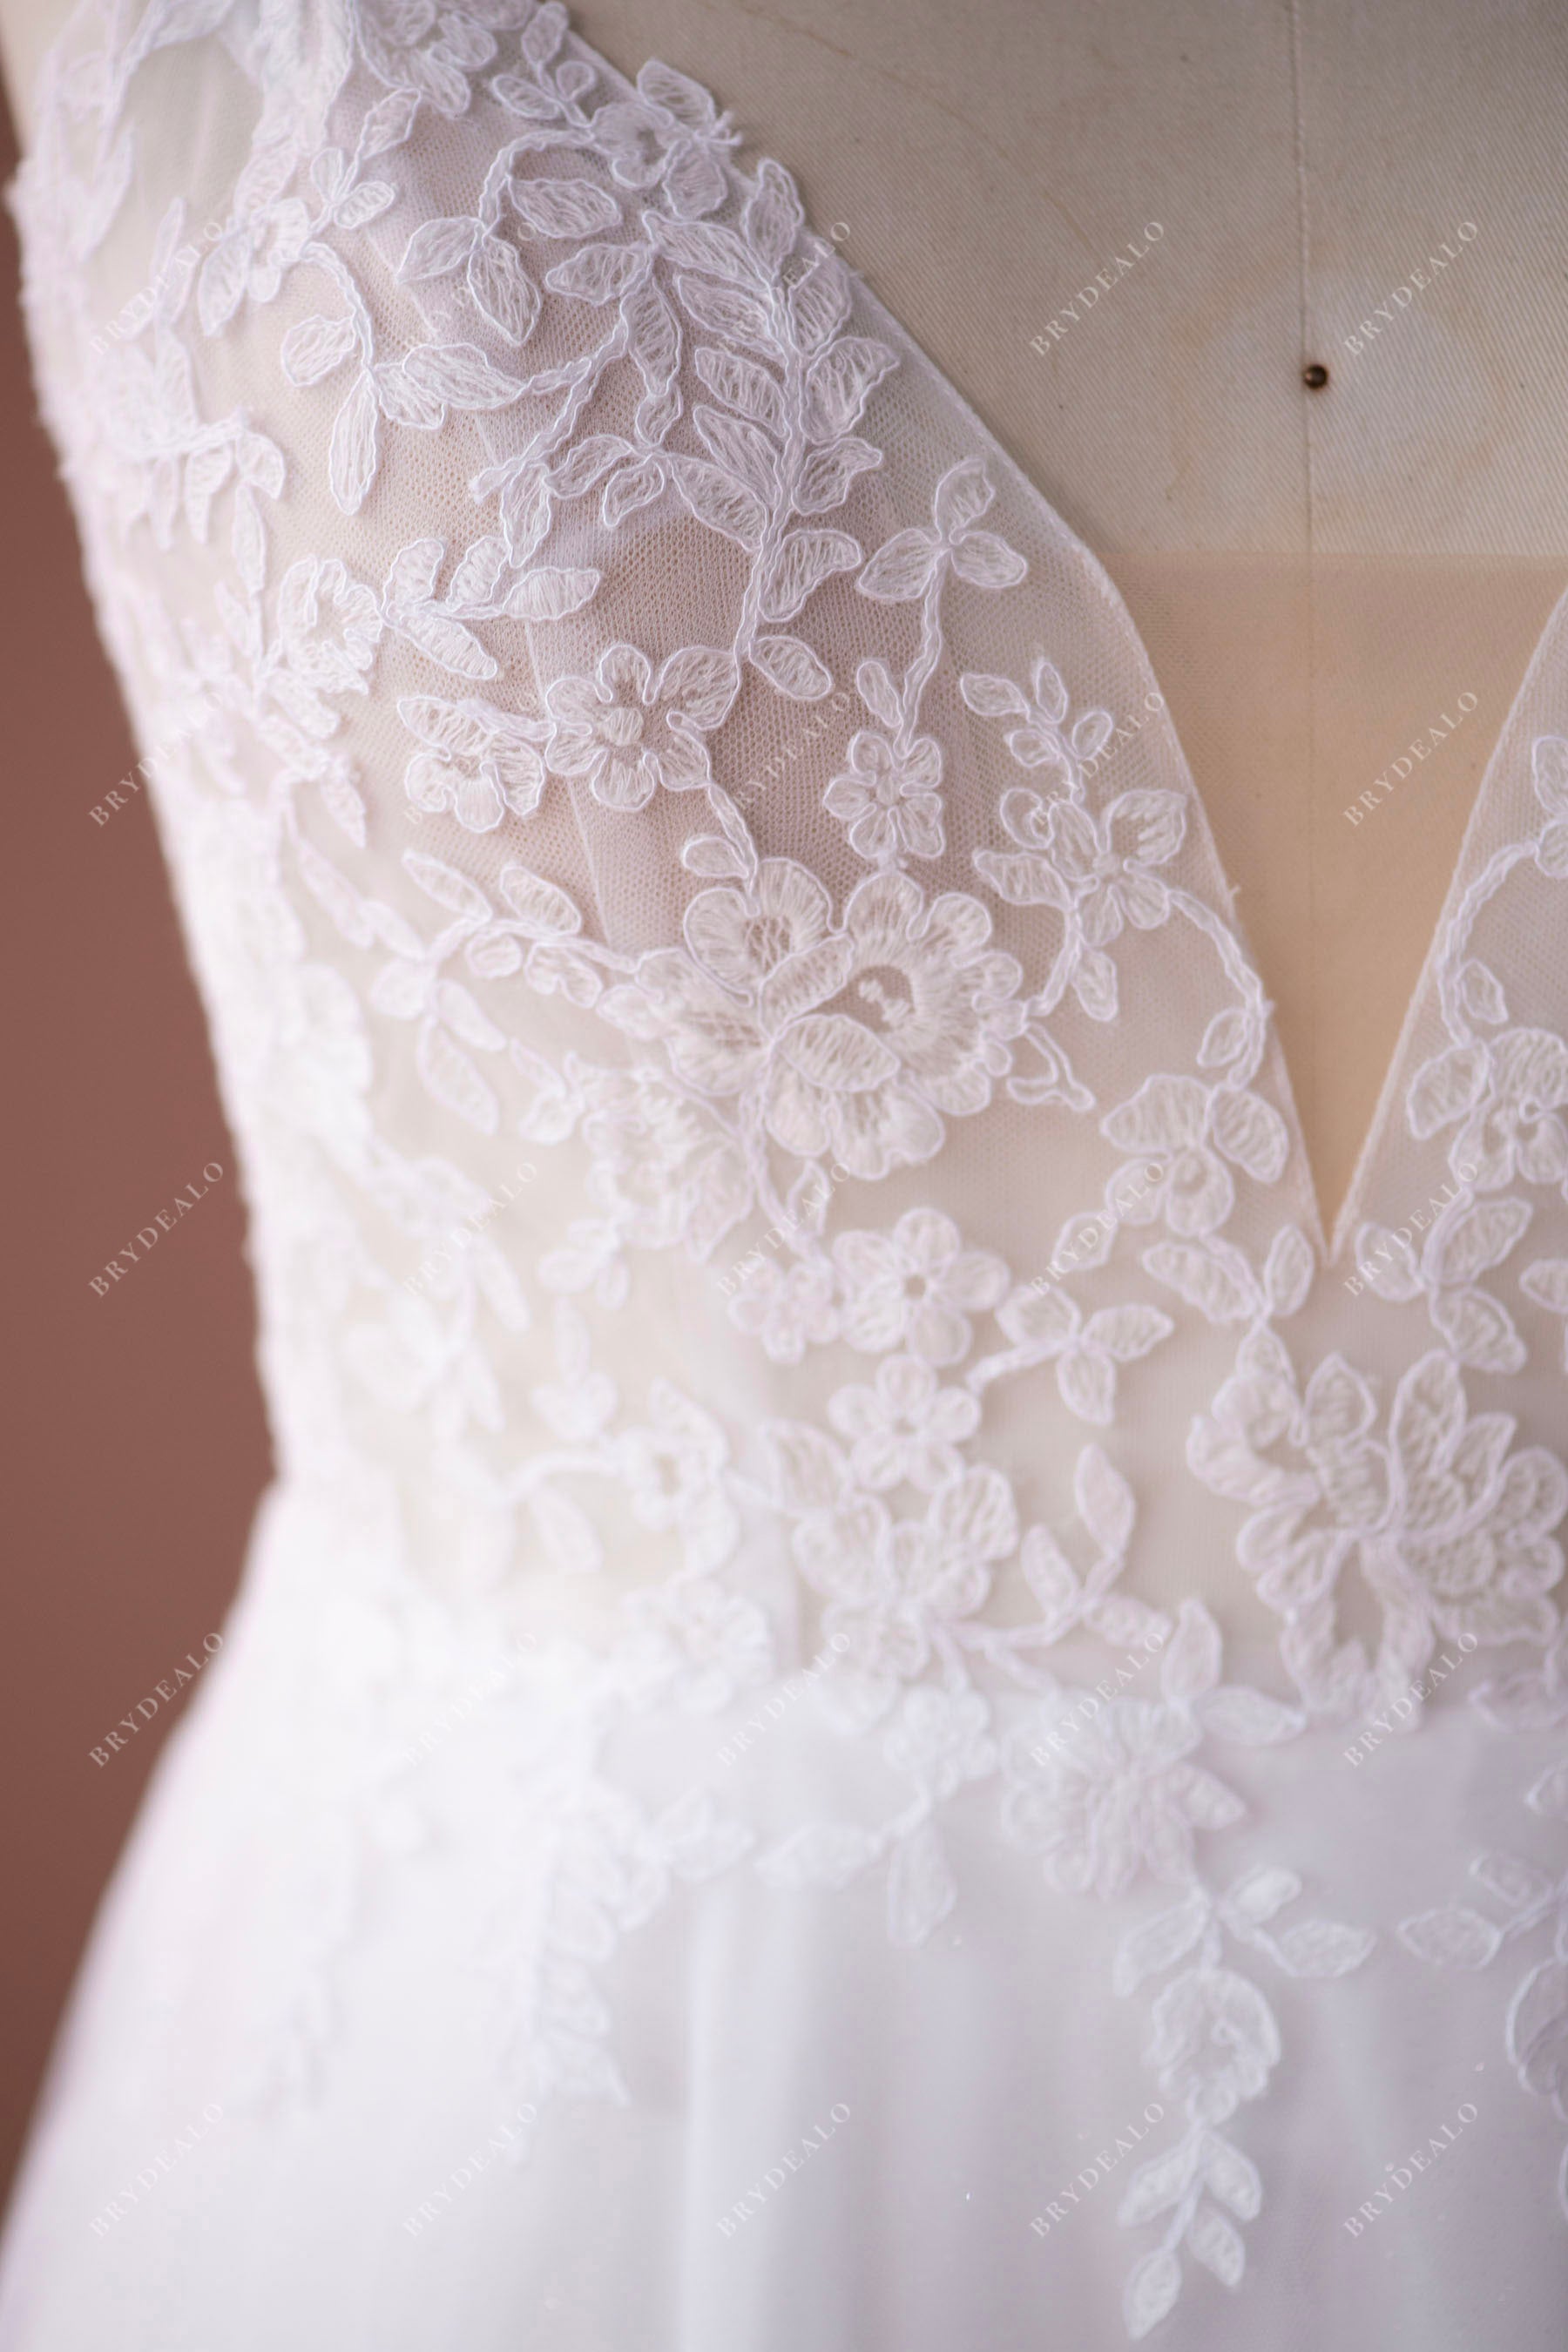 flower lace wedding dress